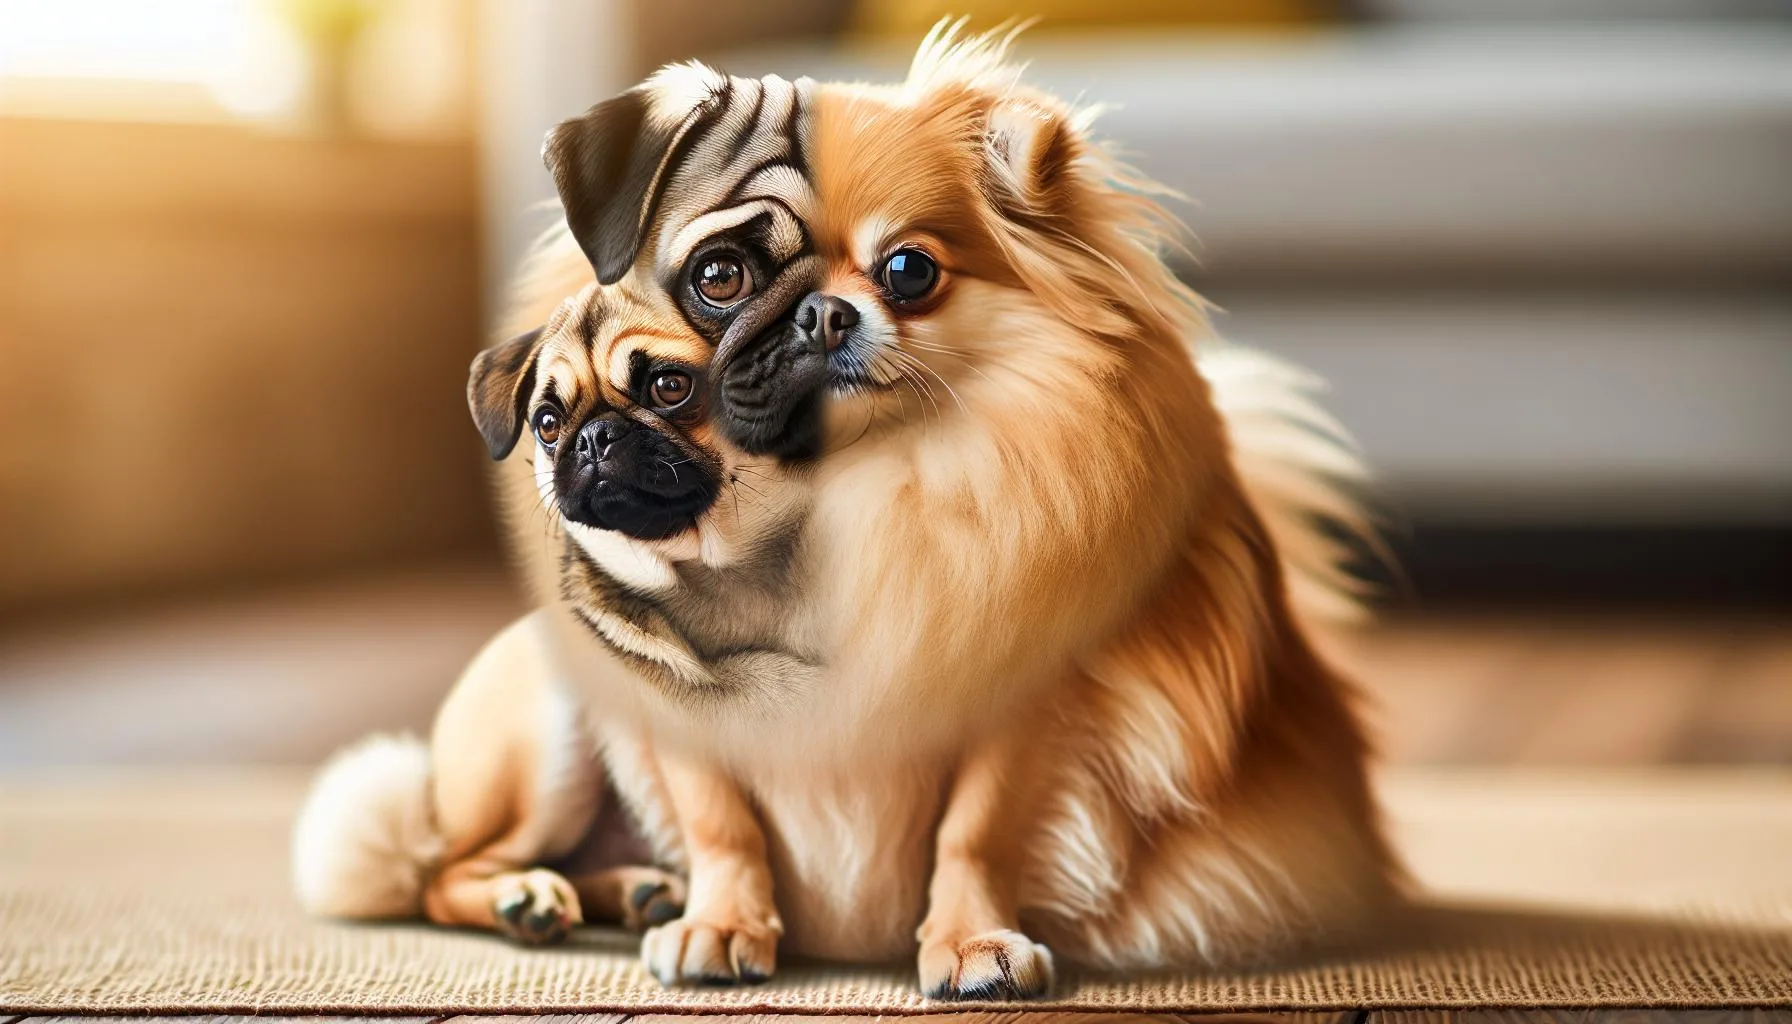 Pug Pomeranian Chihuahua Mix: Your New Best Friend!